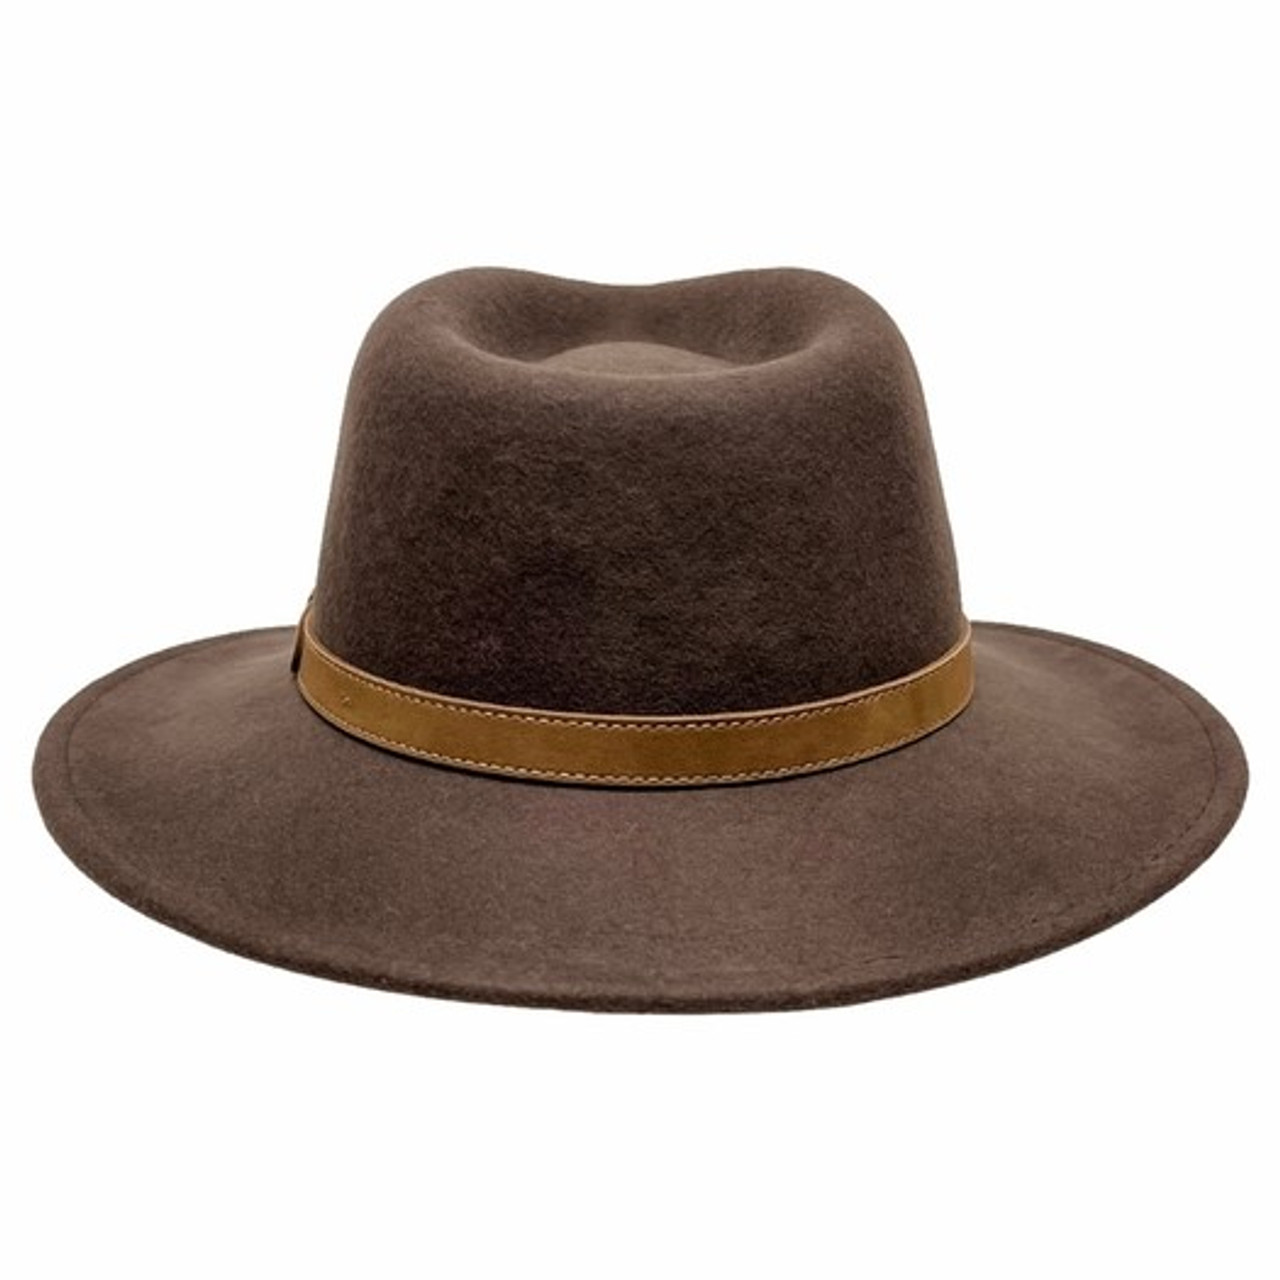 Boondocks Felt Cowboy Hat - Brown